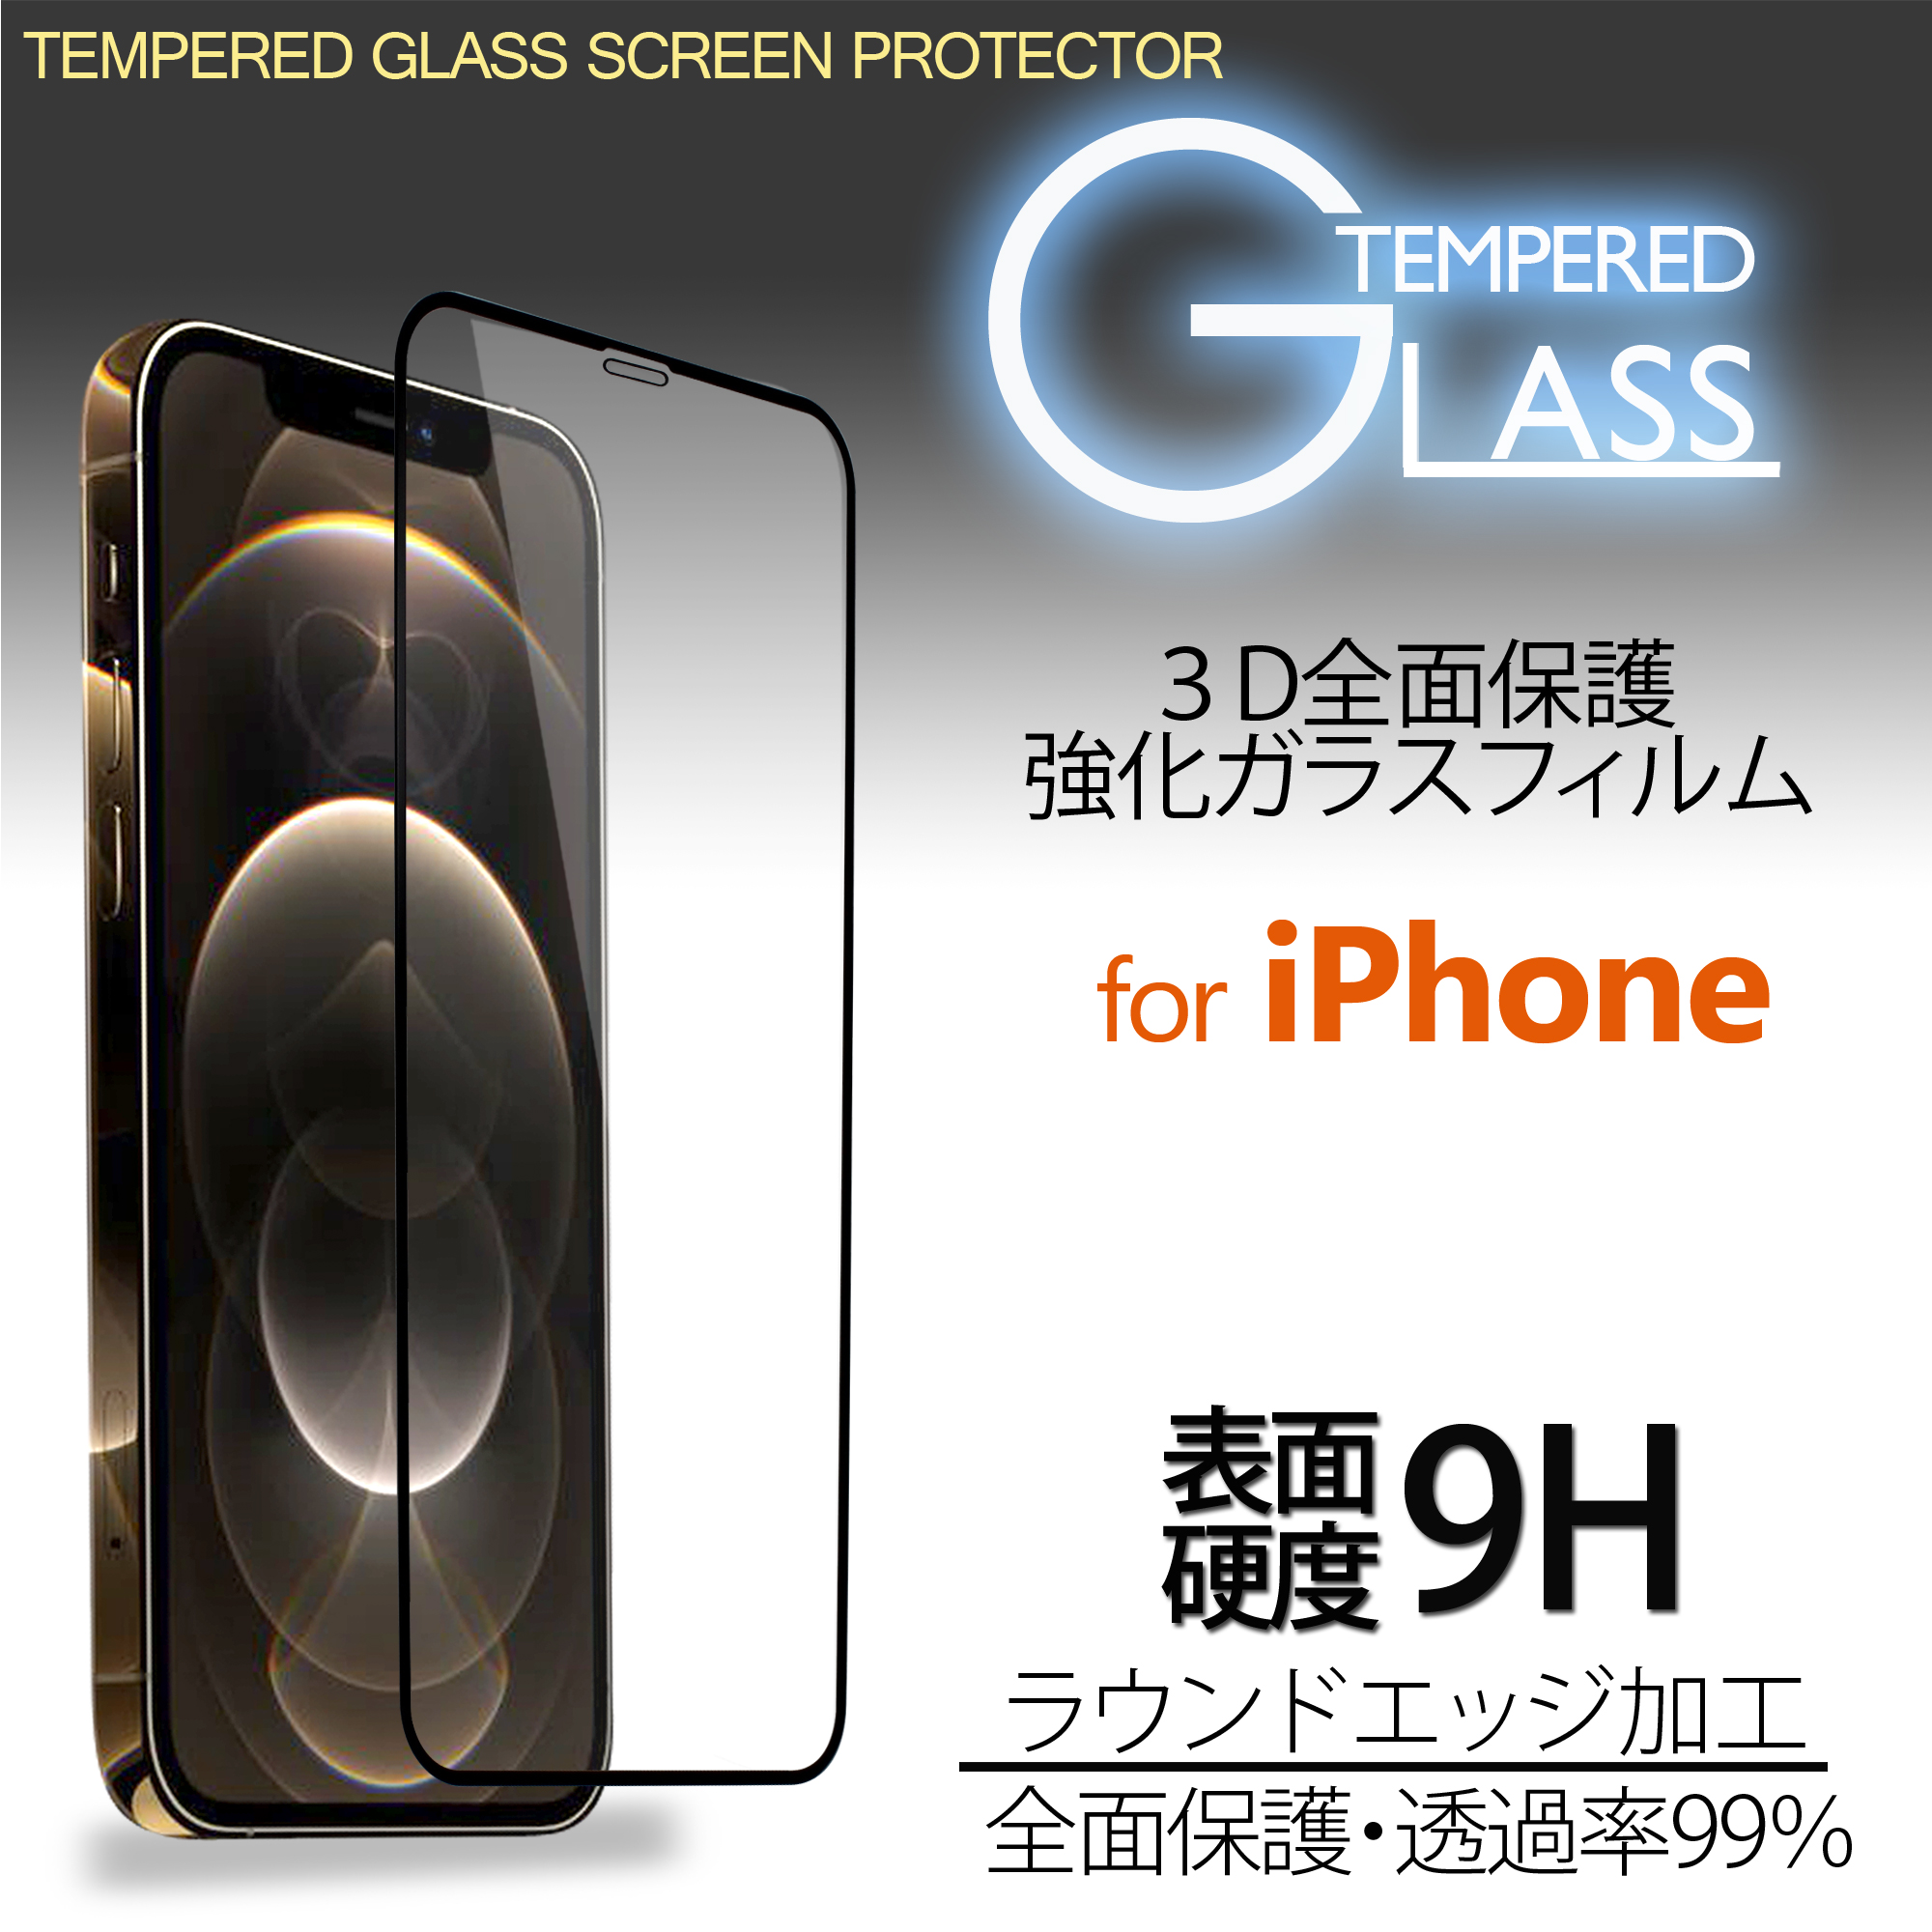 3D 全面保護 強化ガラスフィルム 9H iPhone12 Pro Max / iPhone12 mini ...